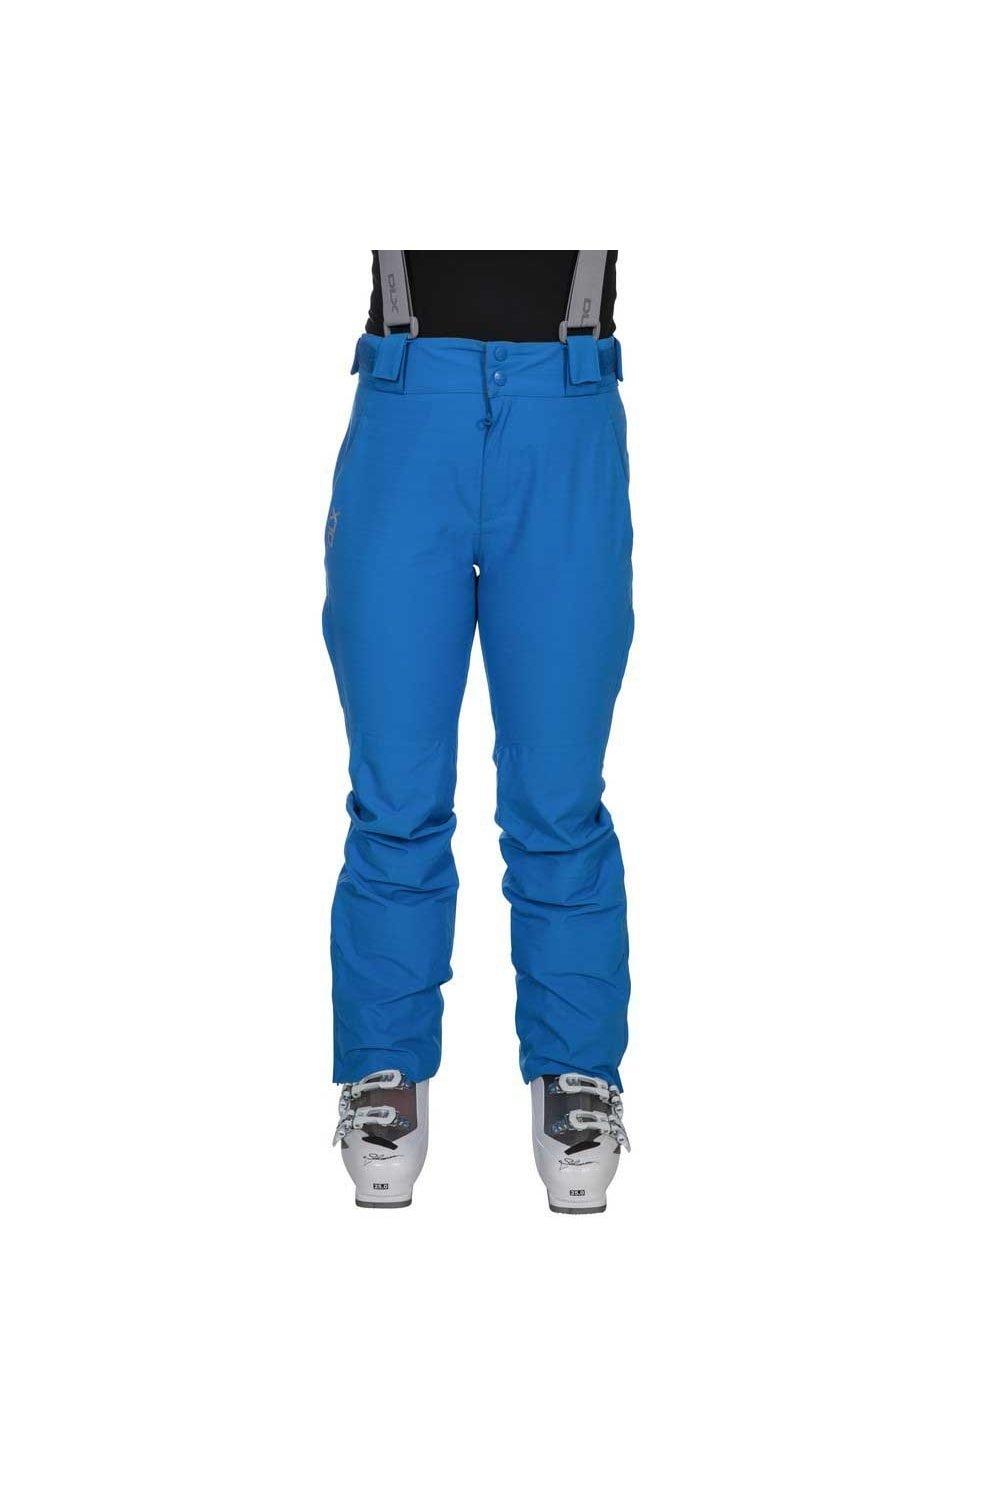 Trespass Women's Jacinta DLX Ski Salopettes Trousers|Size: XS|blue